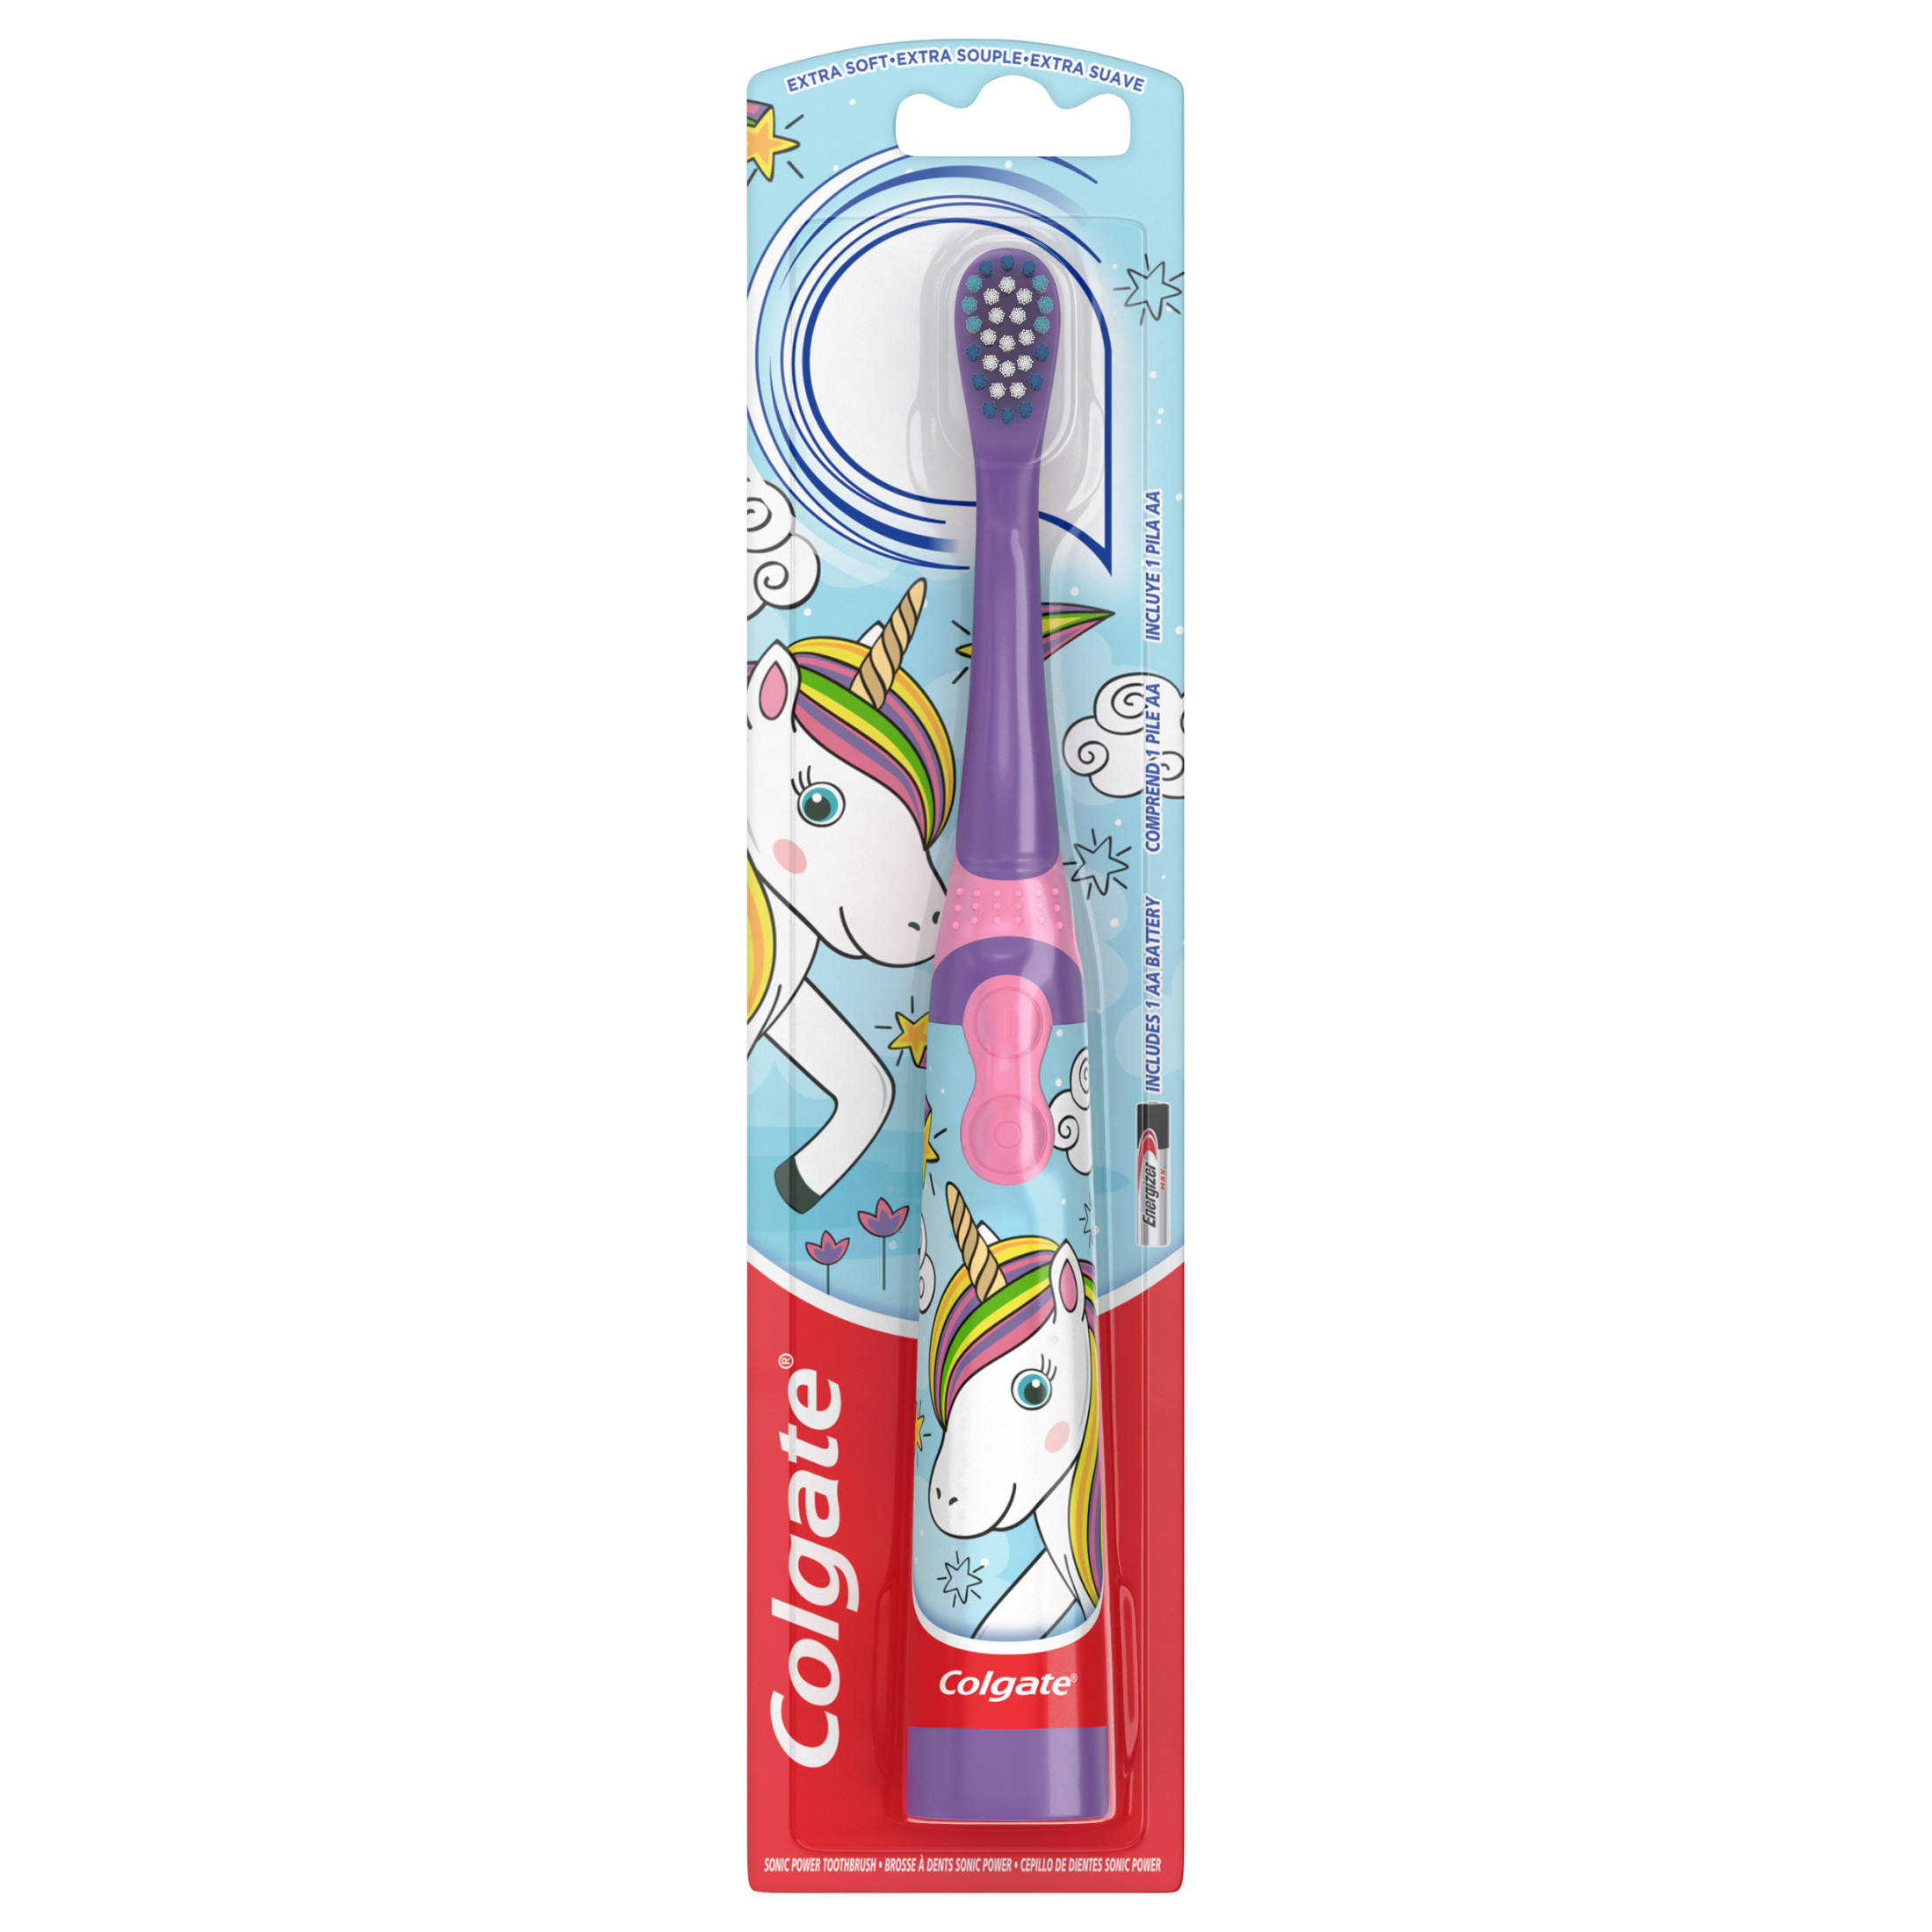 Colgate Kids Battery Toothbrush, Unicorn Toothbrush, 1 Pack - image 1 of 9